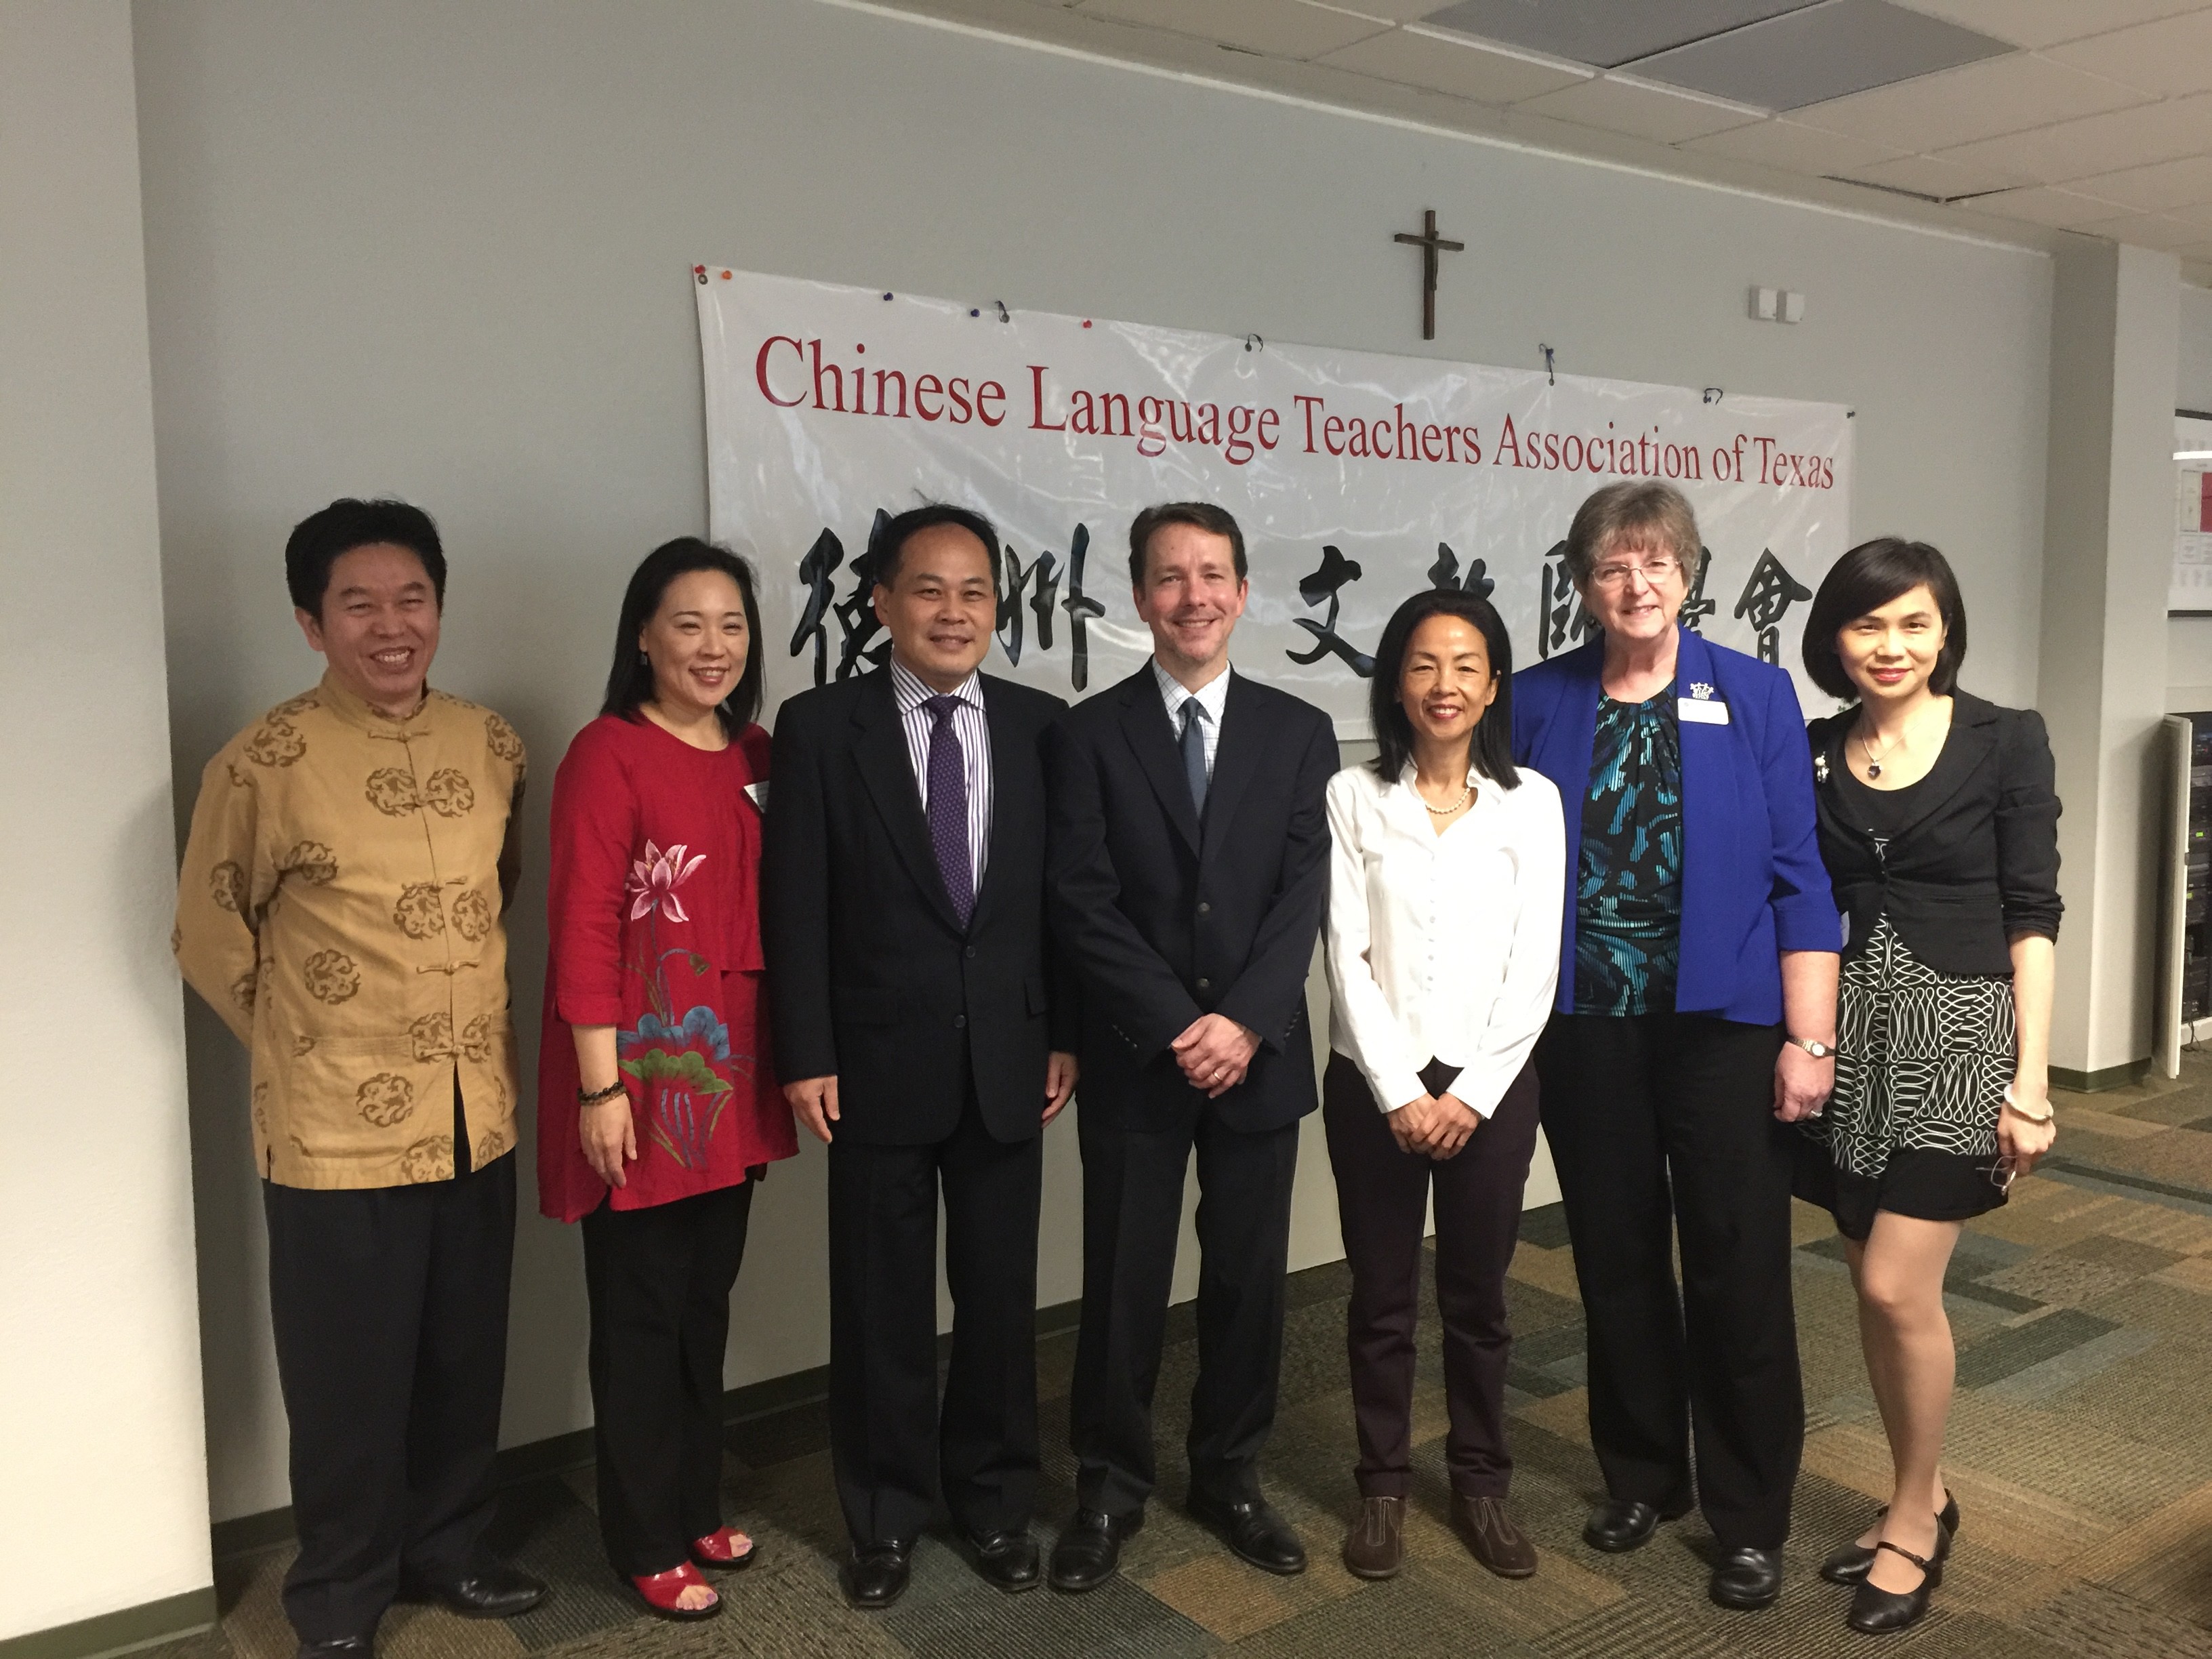 2017 Houston Chinese language teacher professional development workshop a great success